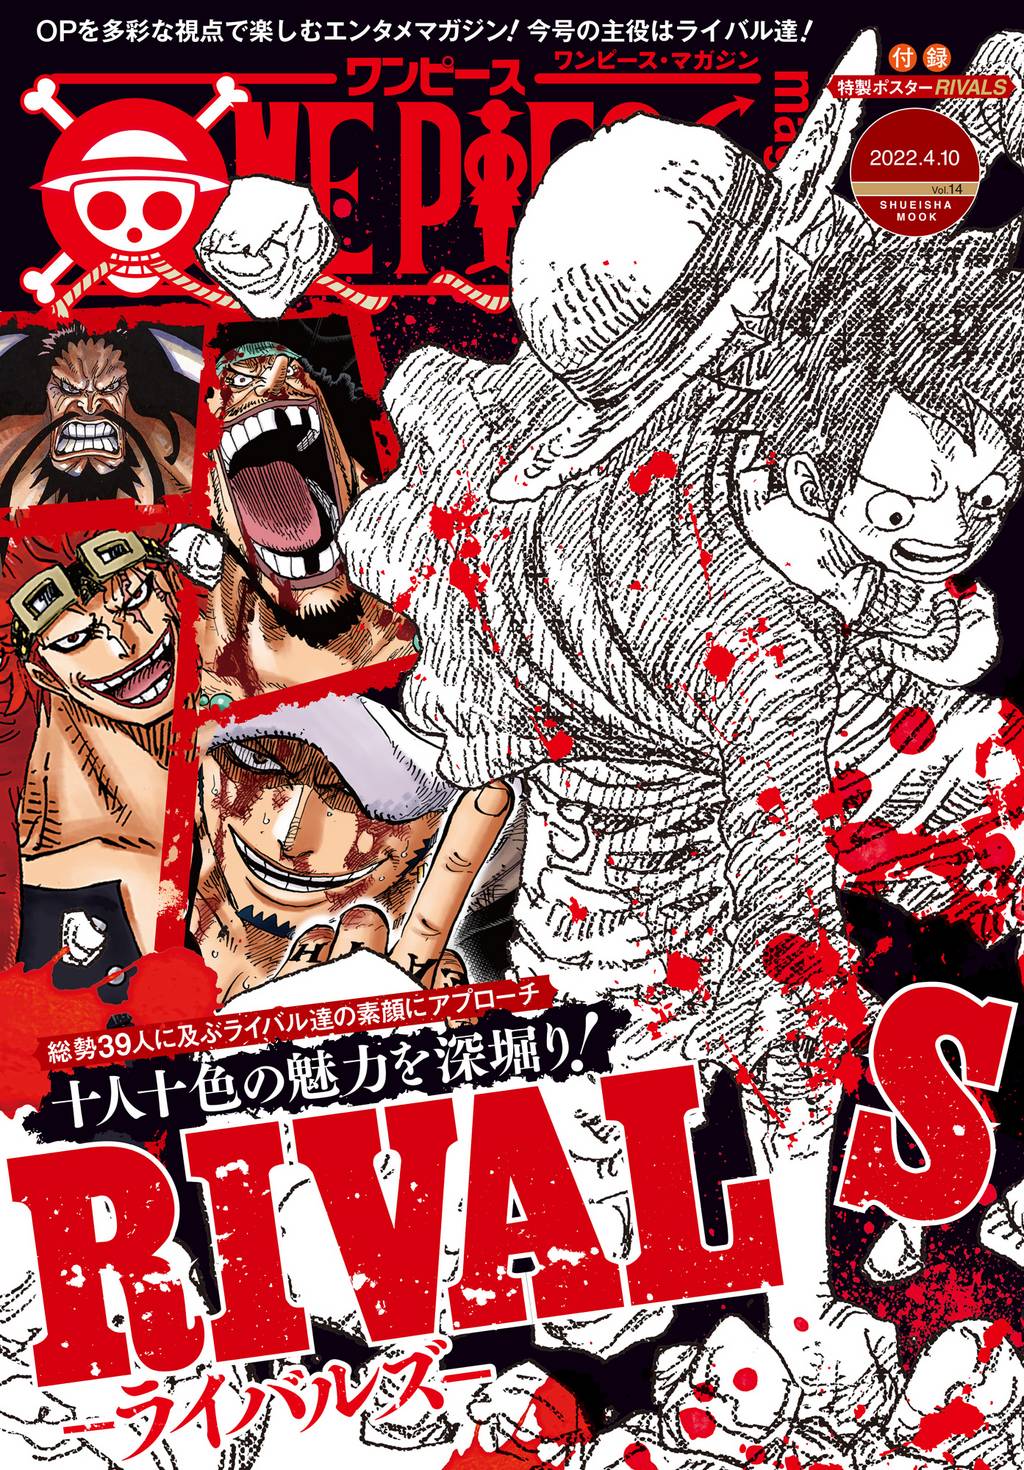 One Piece Magazine Vol 14 マンガ 電子書籍 U Next 初回600円分無料